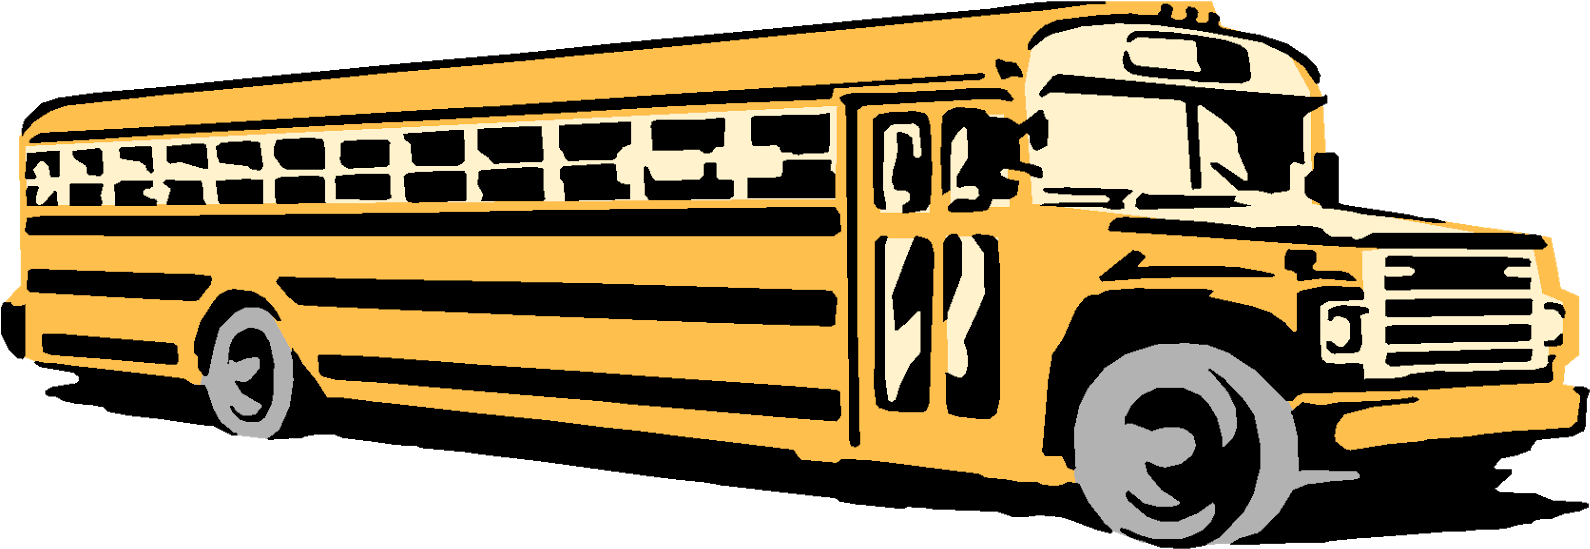 School Bus Driver Classroom Training - School Bus Clip Art (1600x565)